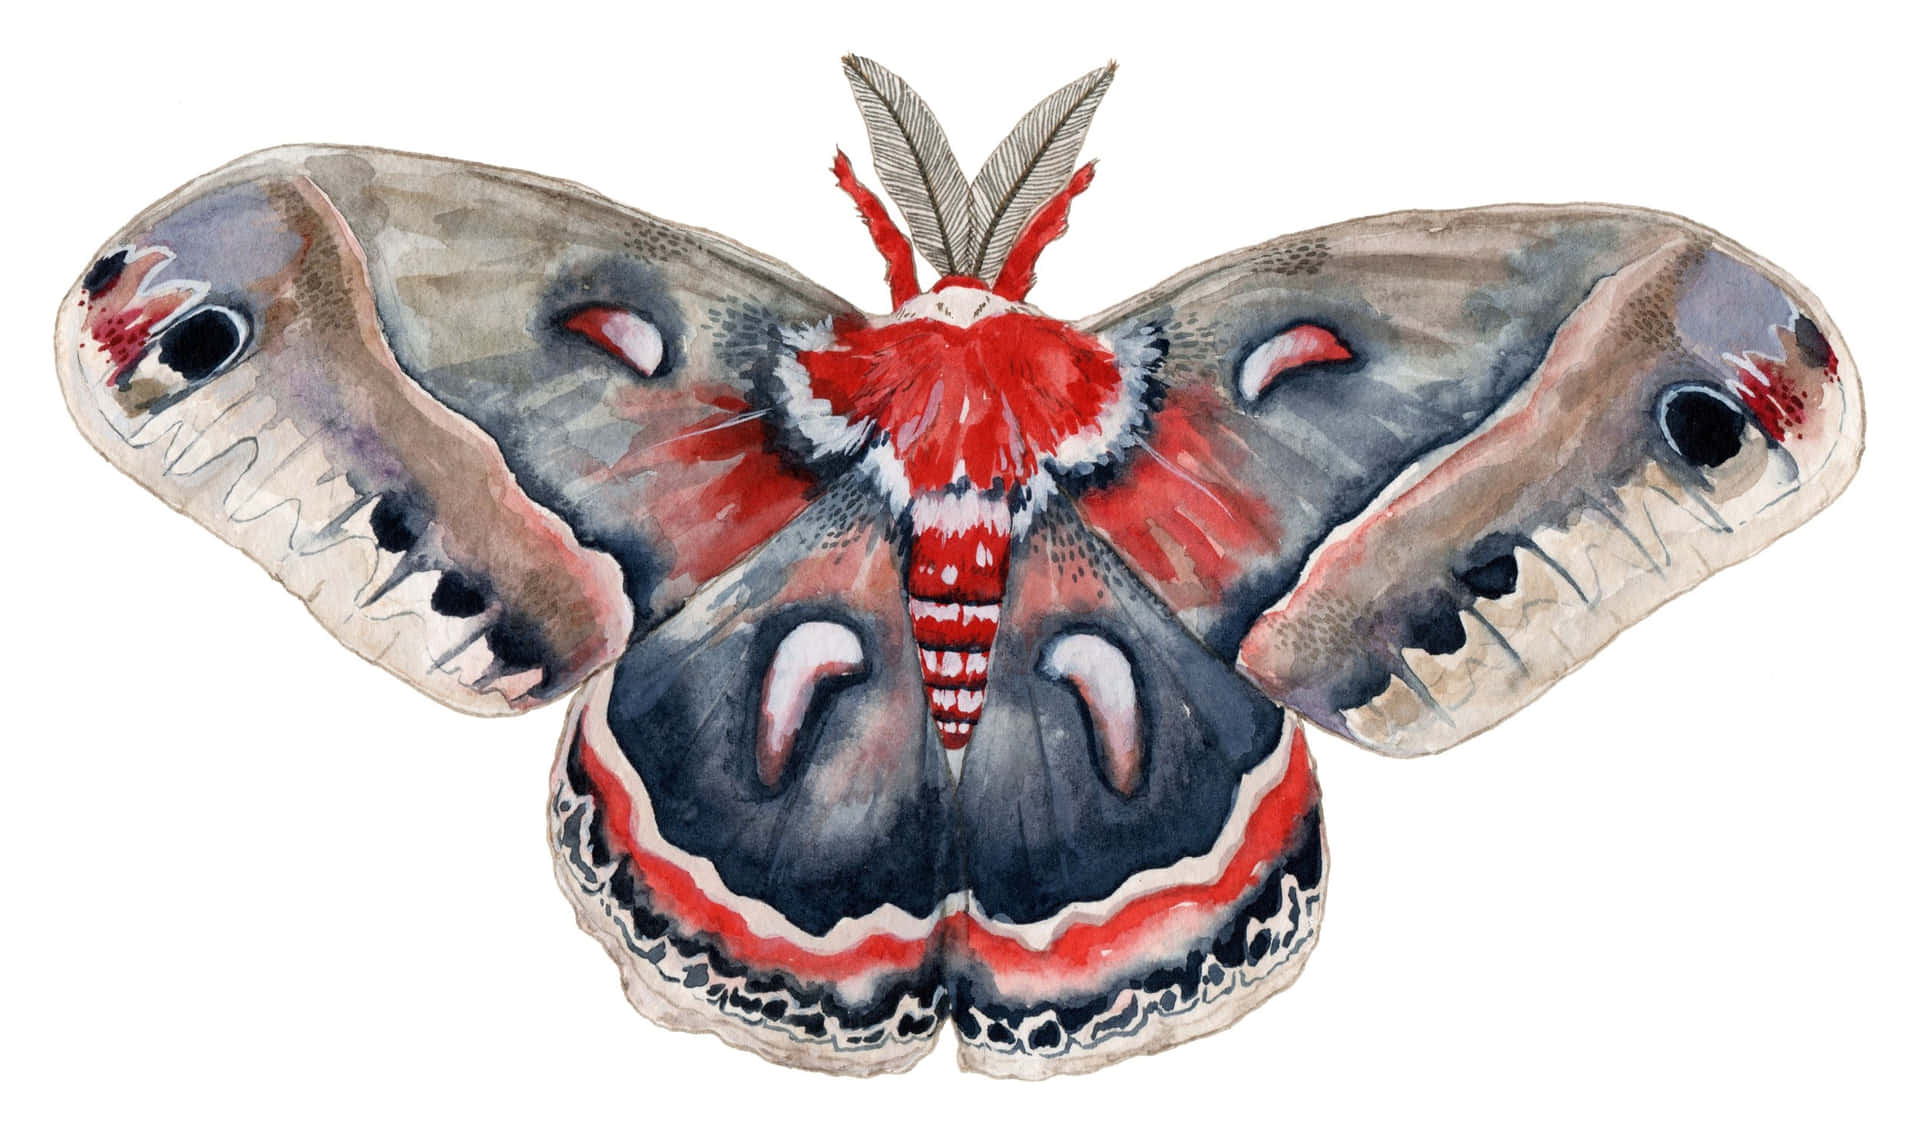 Cecropia Moth Illustration Wallpaper